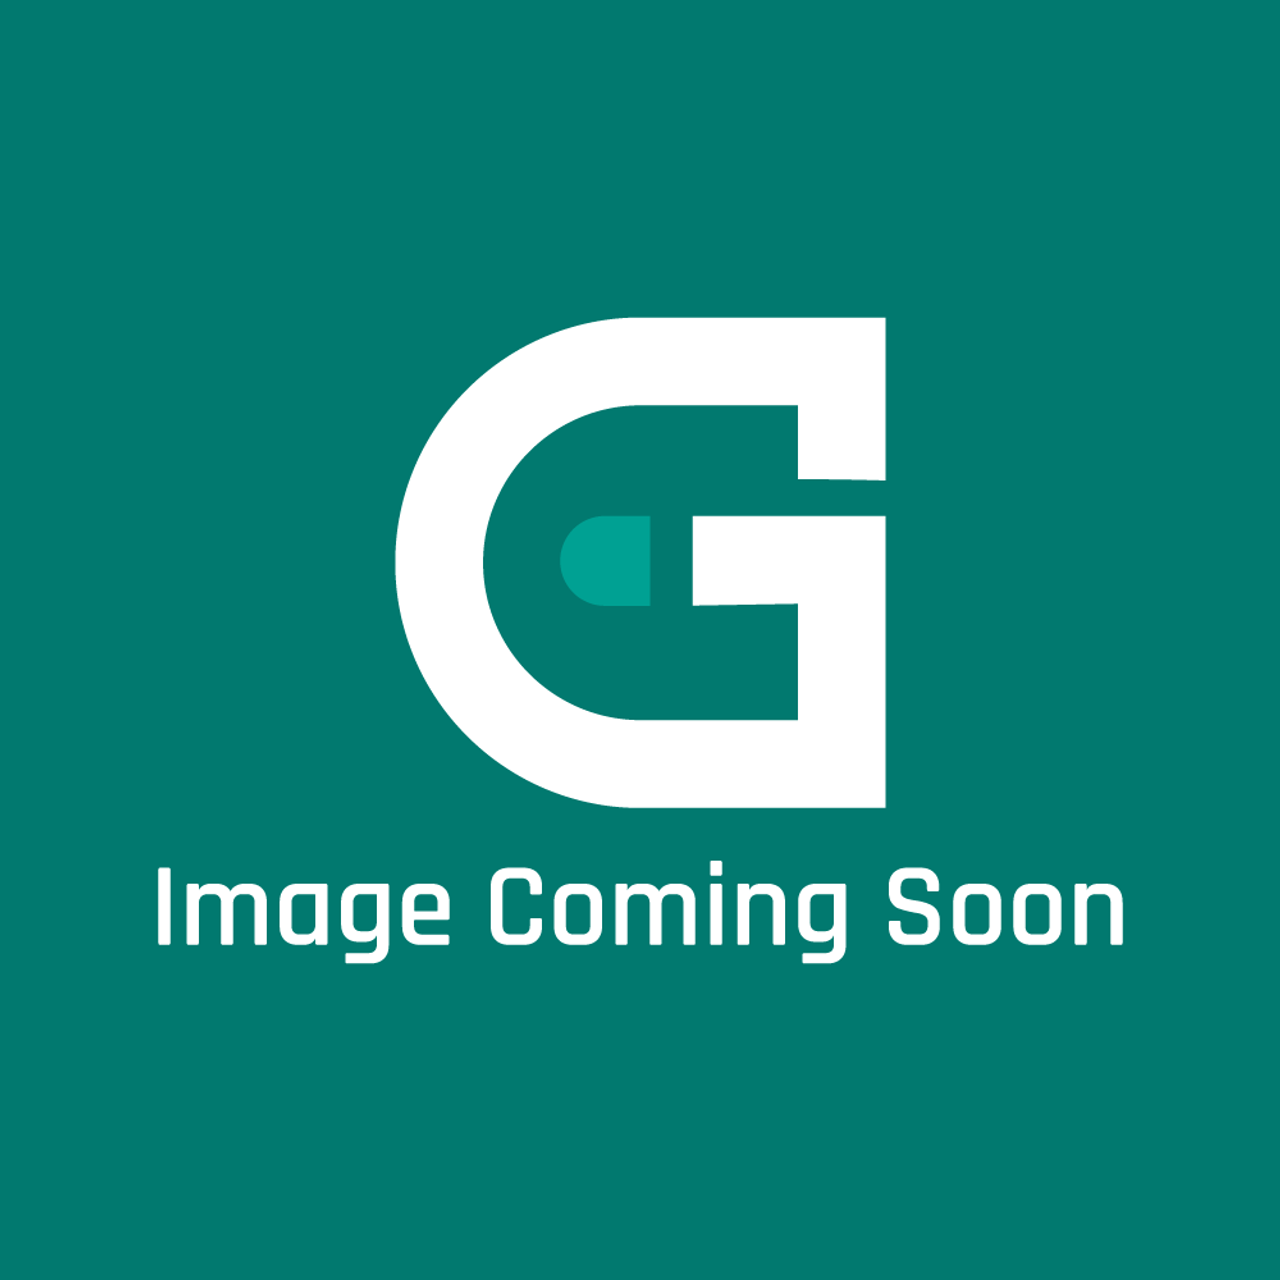 GE Appliances WB31T10153 - Grate Lt 36 (Prf) - Image Coming Soon!